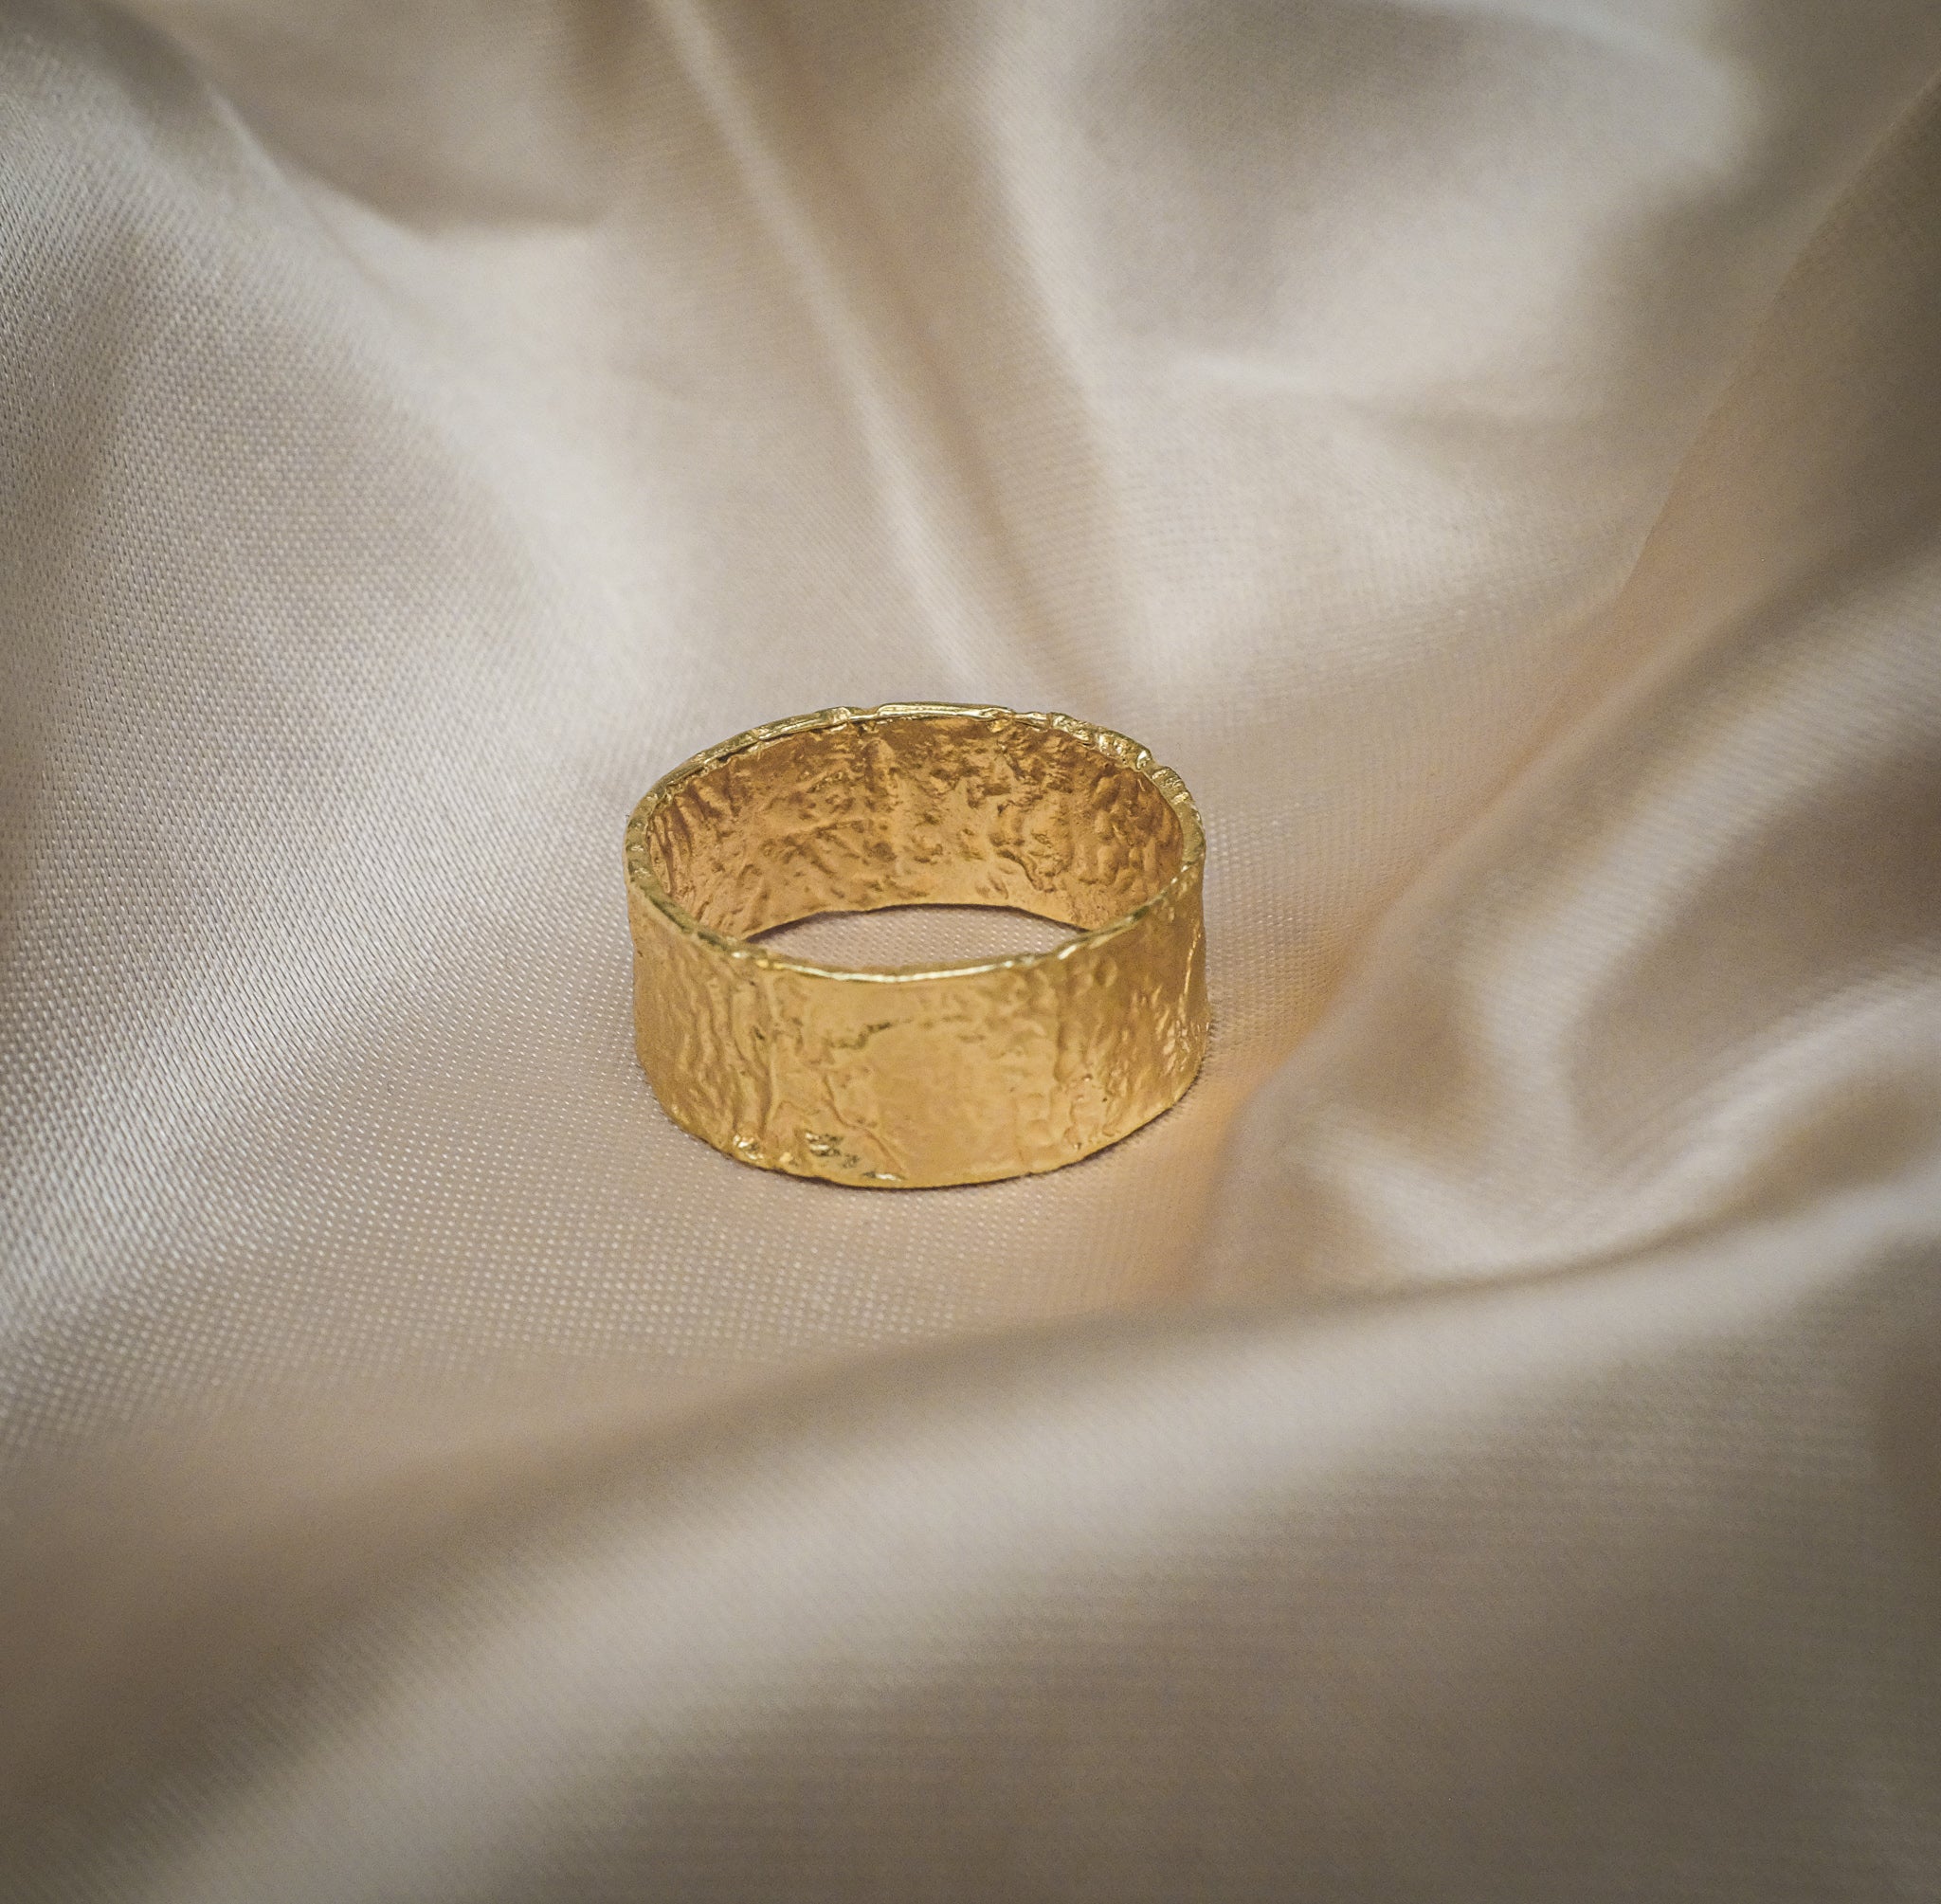 Athena Ring -Silver